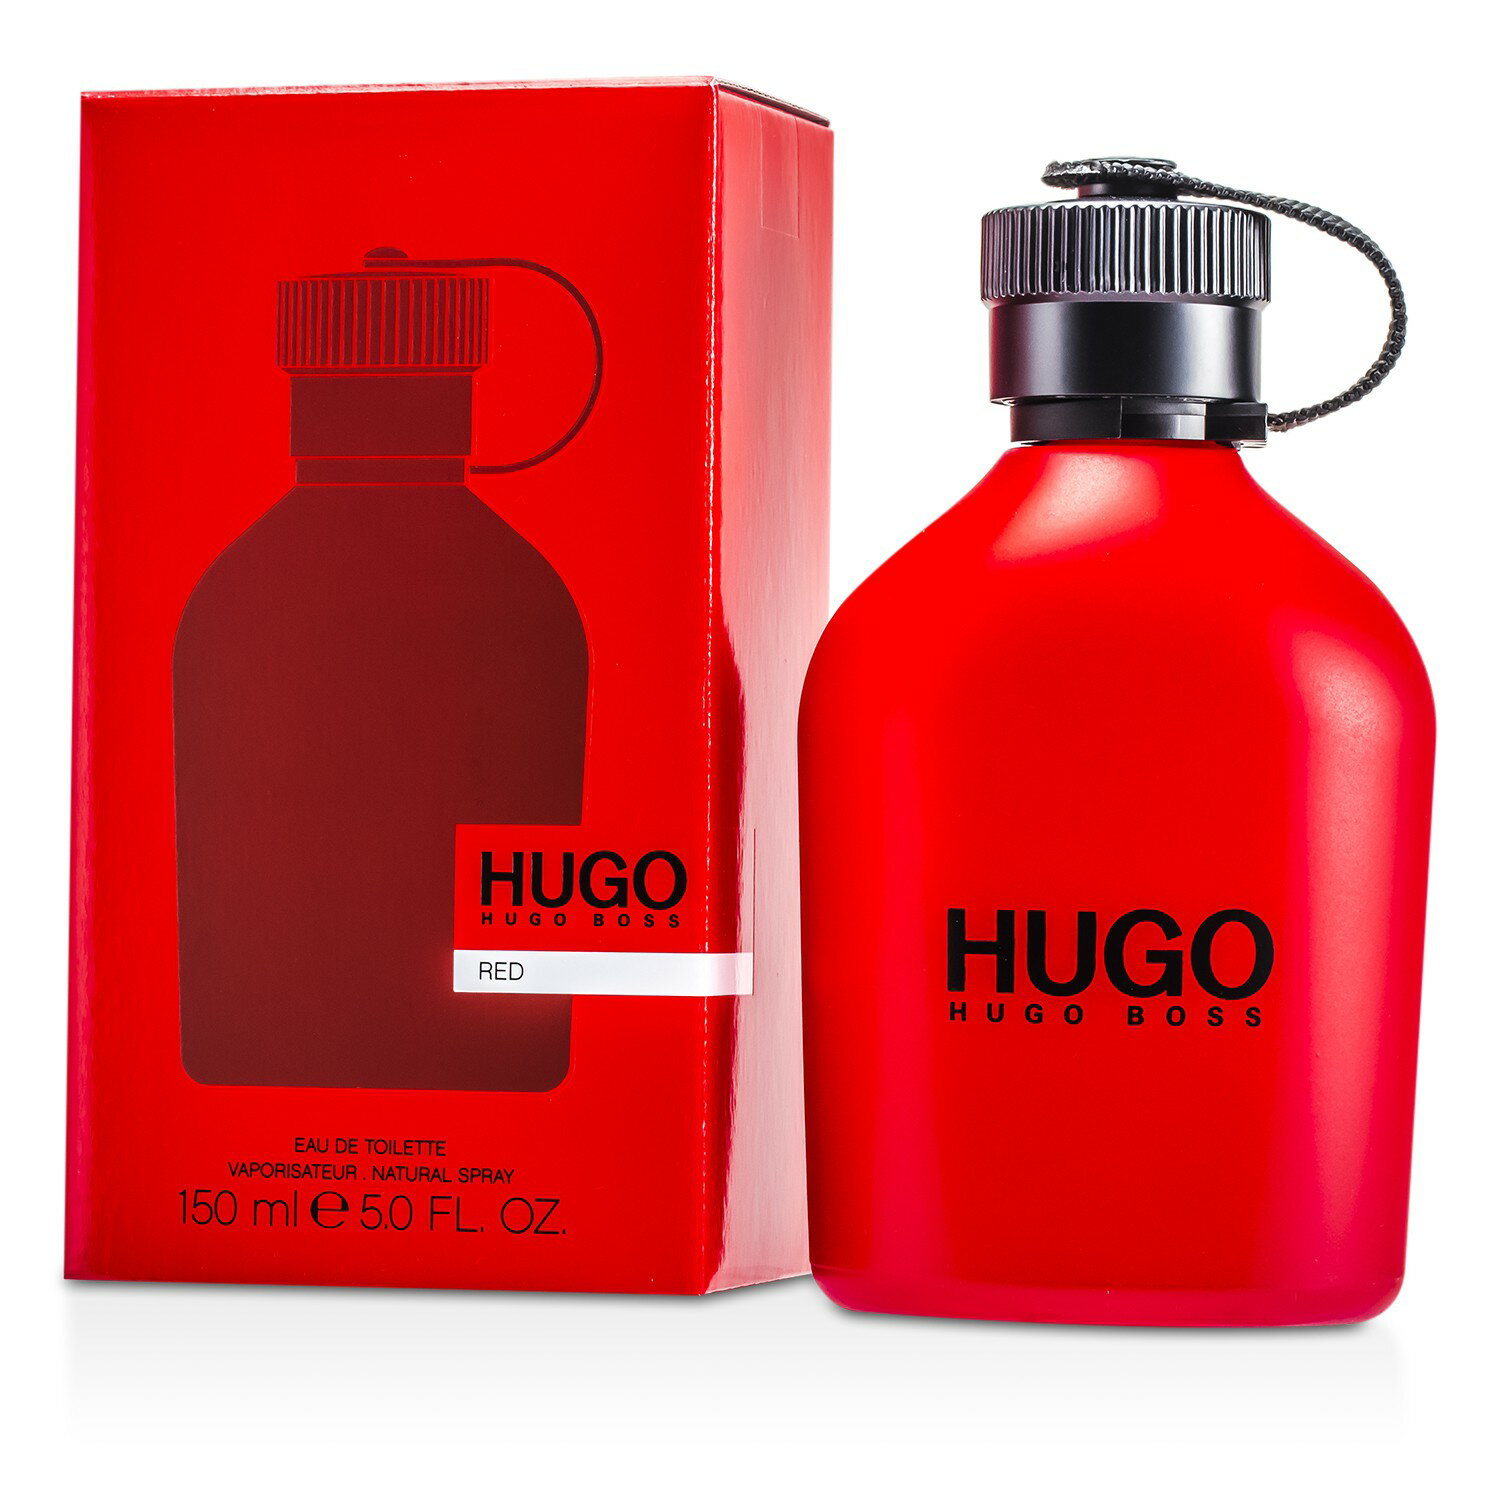 Хуго босс ред. Хьюго босс ред мужские. Hugo Boss Red, EDT., 150 ml. Хьюго ред духи. Hugo Boss женс. Hugo Red (l) (m/b) EDP.